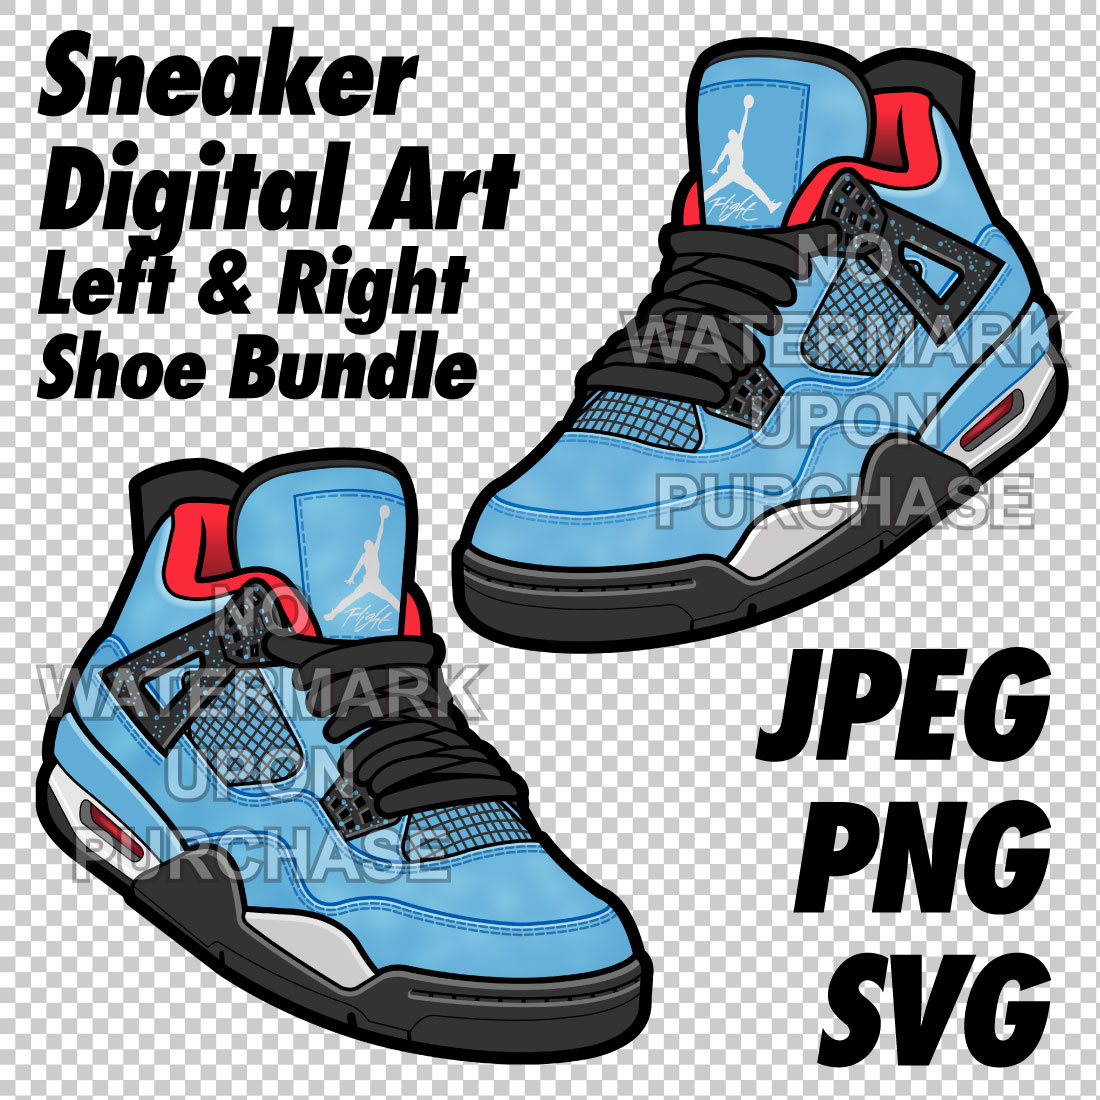 Air Jordan 4 Travis Scott JPEG PNG SVG Sneaker Art Right & Left Shoe Bundle cover image.